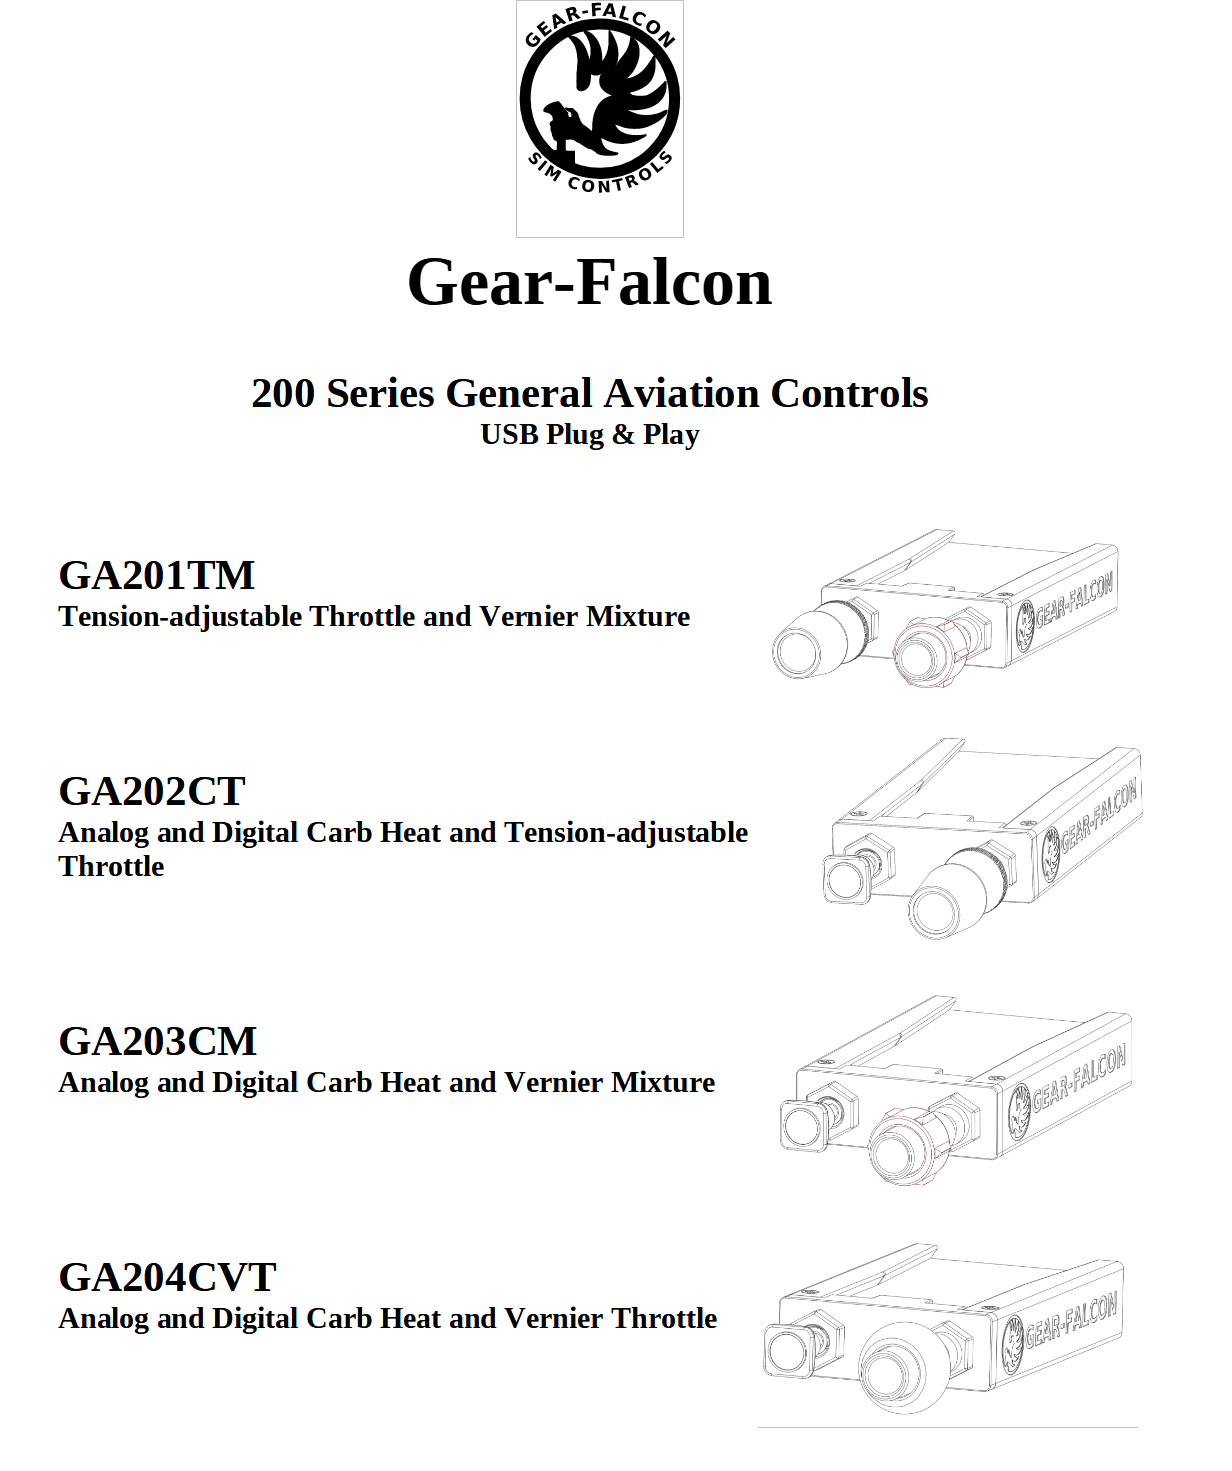 General Aviation Control panel, GA200 Series